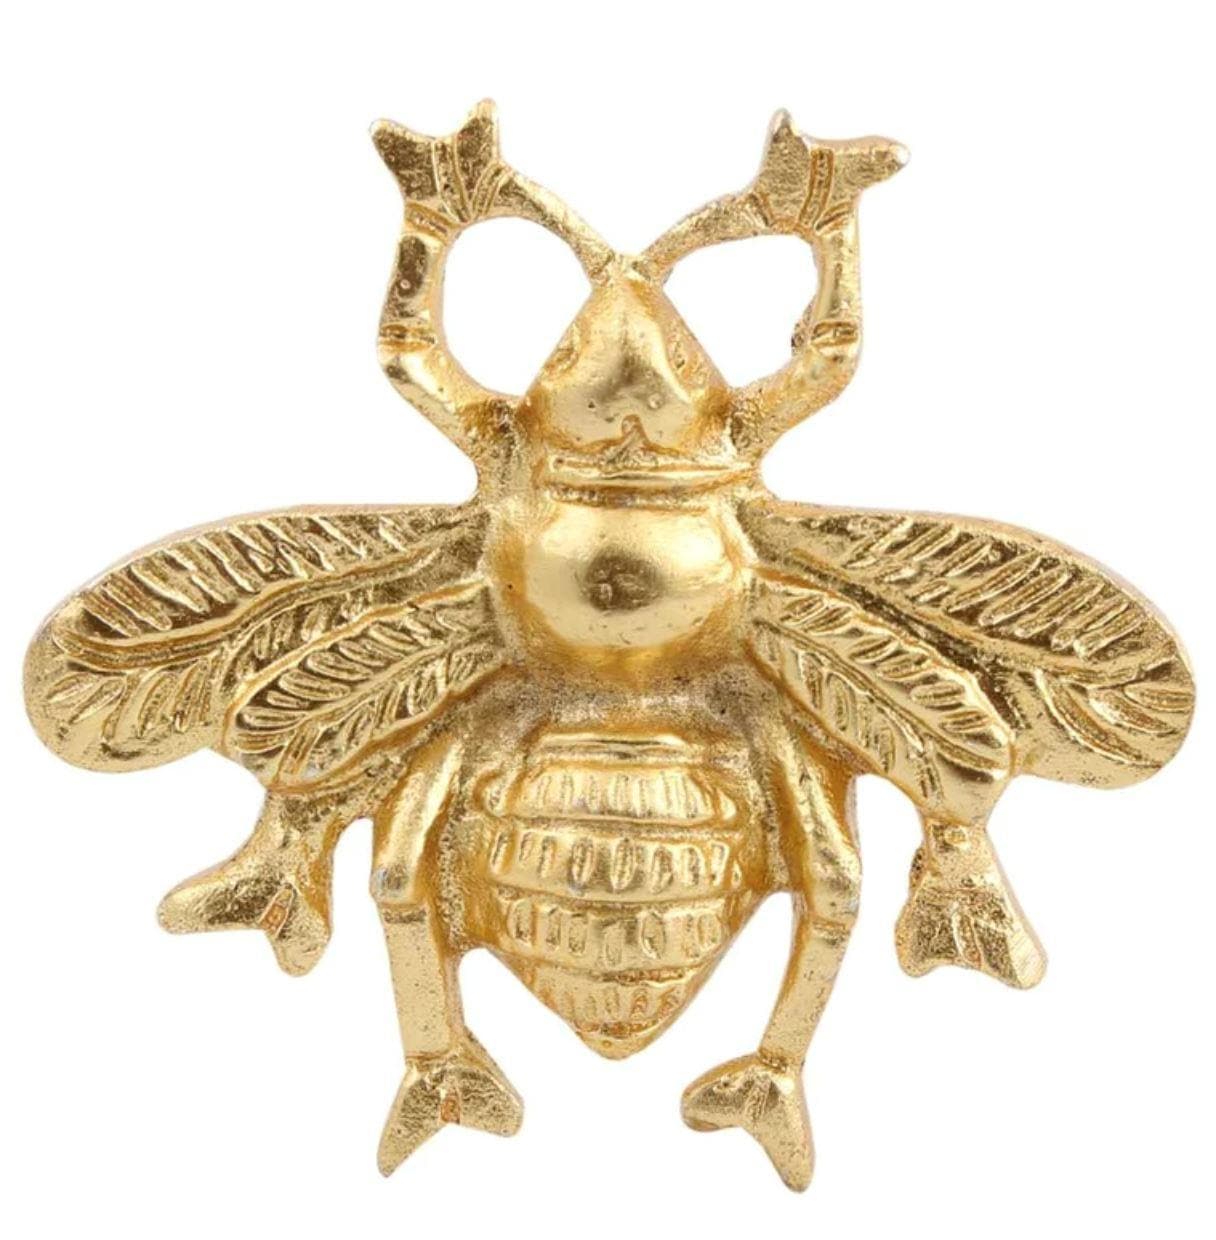 Handmade Brass Bumble Bee Cabinet Knob - MAIA HOMES